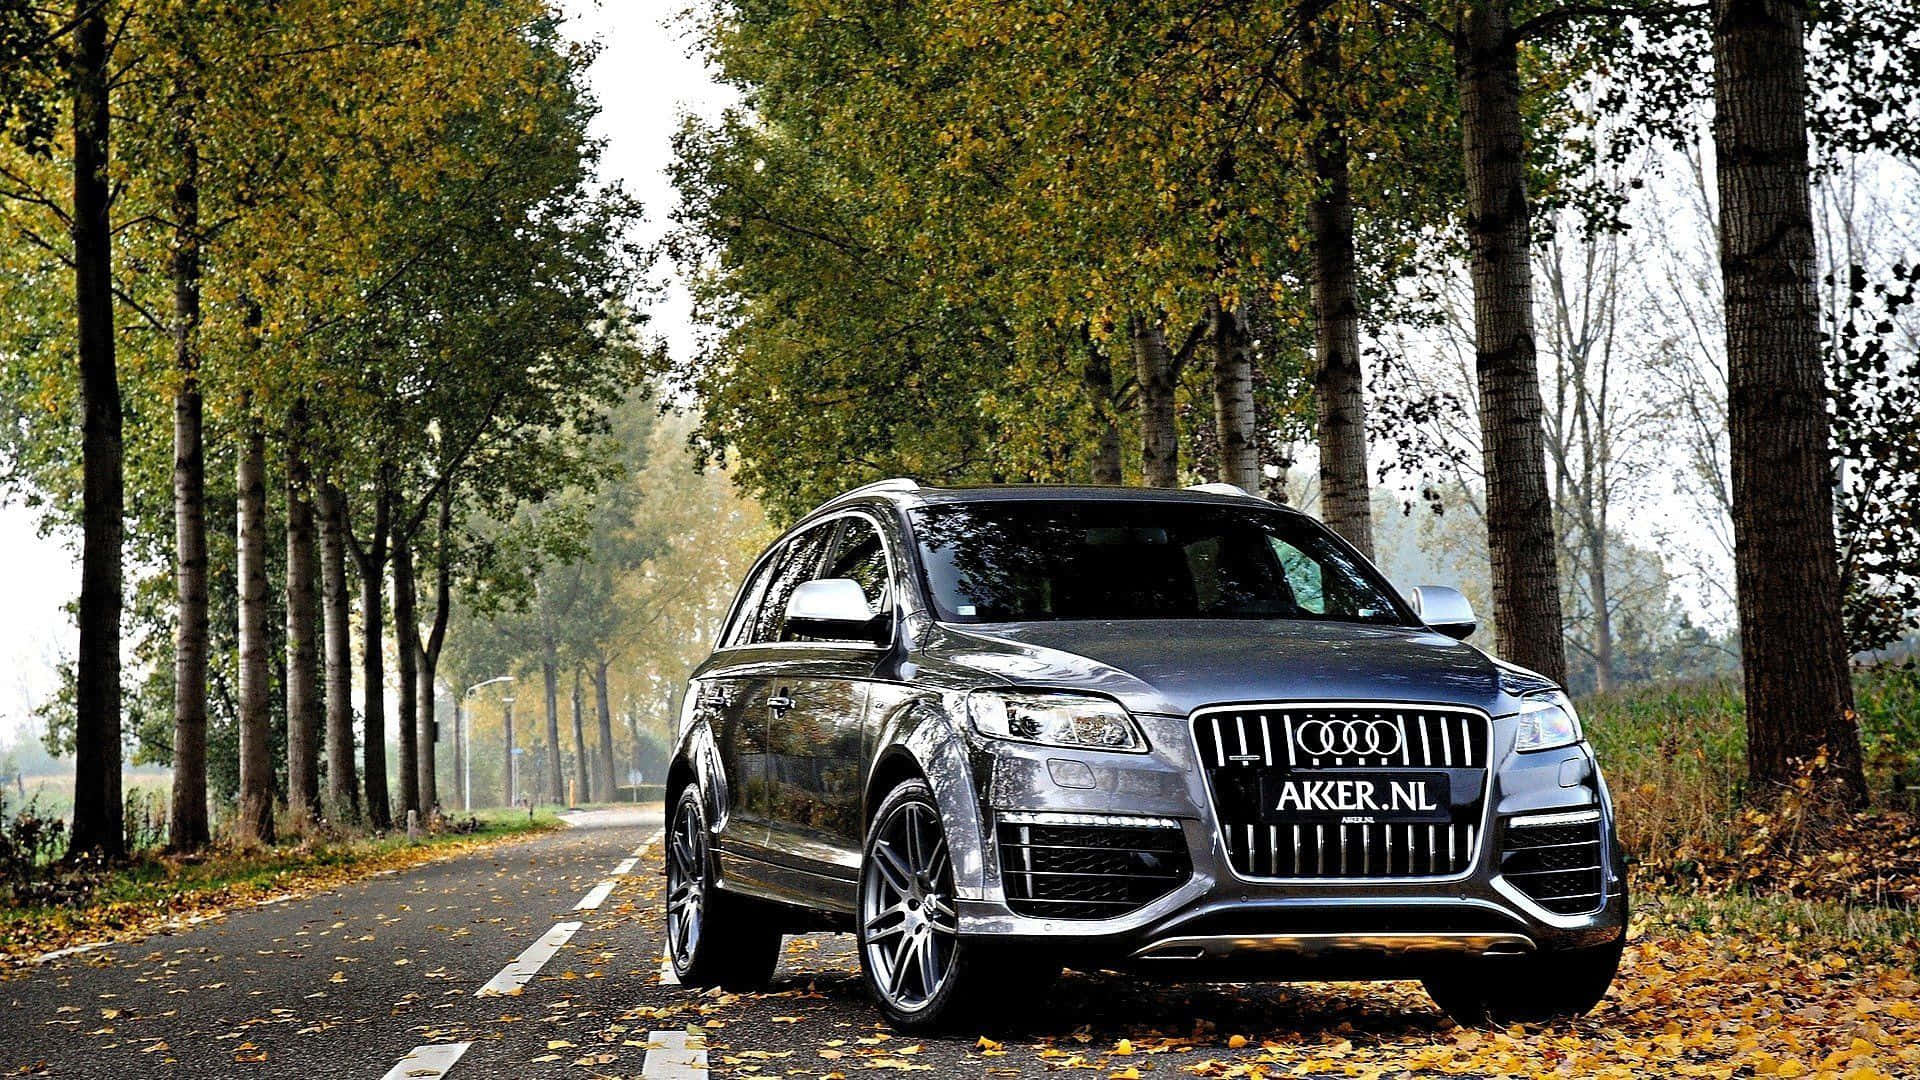 Caption: Stunning Audi Q7 in a Picturesque Landscape Wallpaper